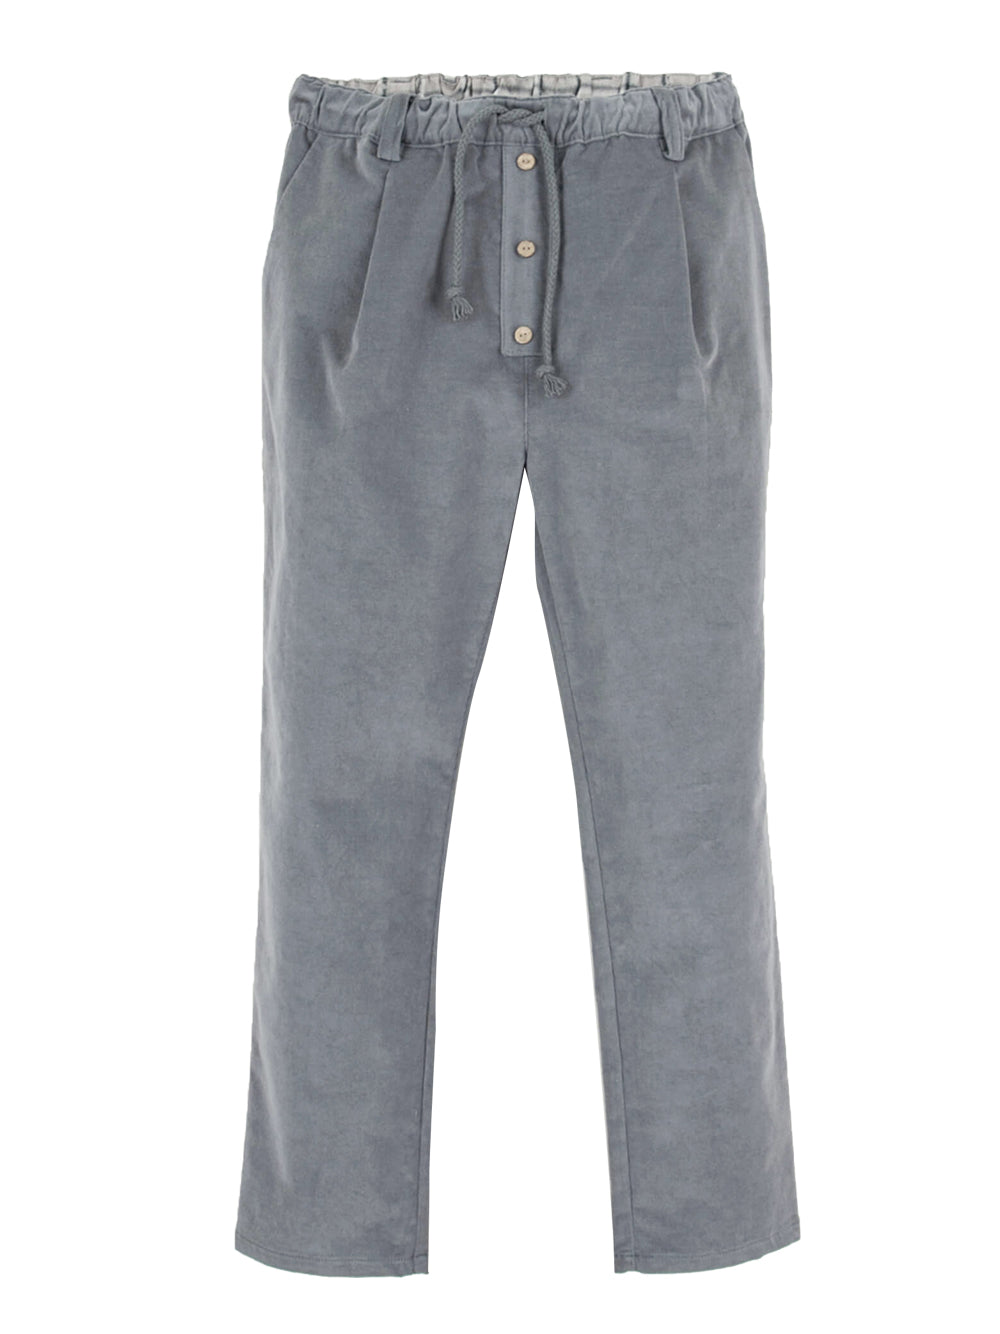 Grey Corduroy Trousers